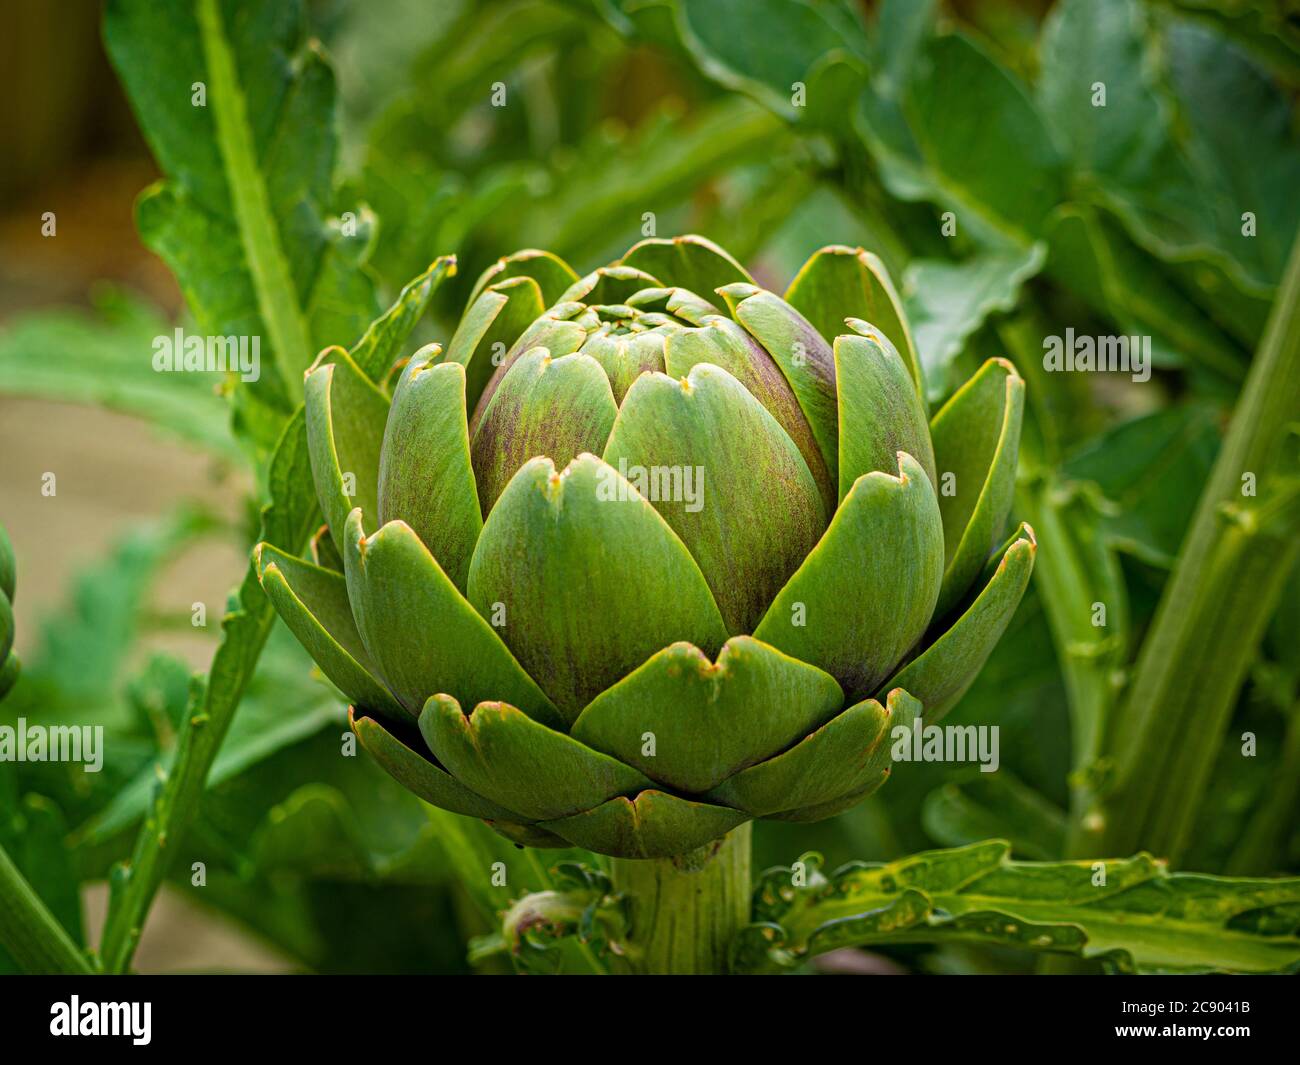 Close up of a globe artichoke growing in a garden. Stock Photo